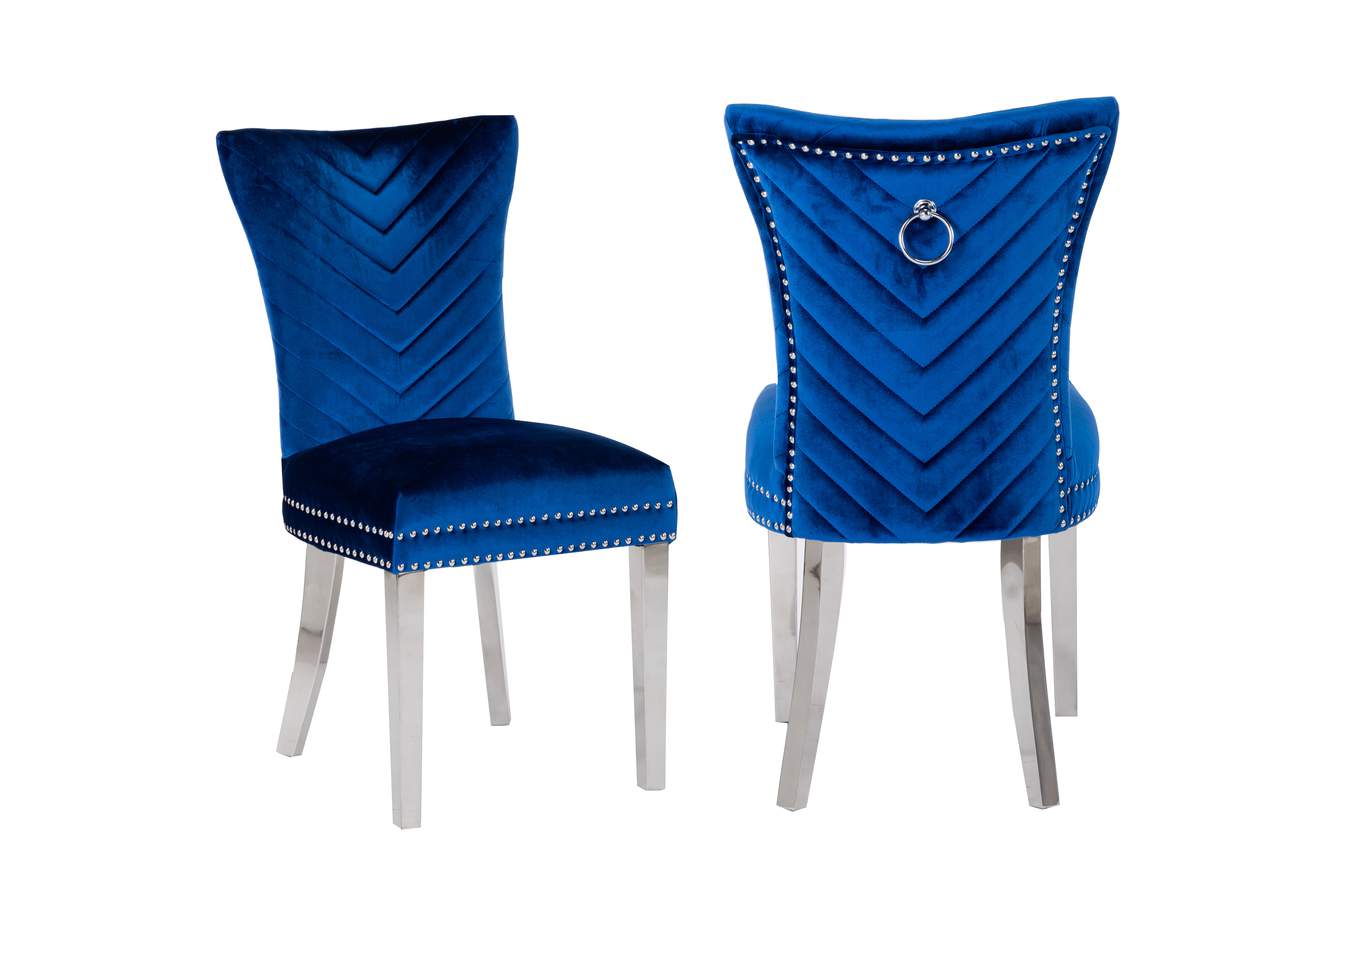 Steel Leg Dining Chair,Galaxy Home Furniture